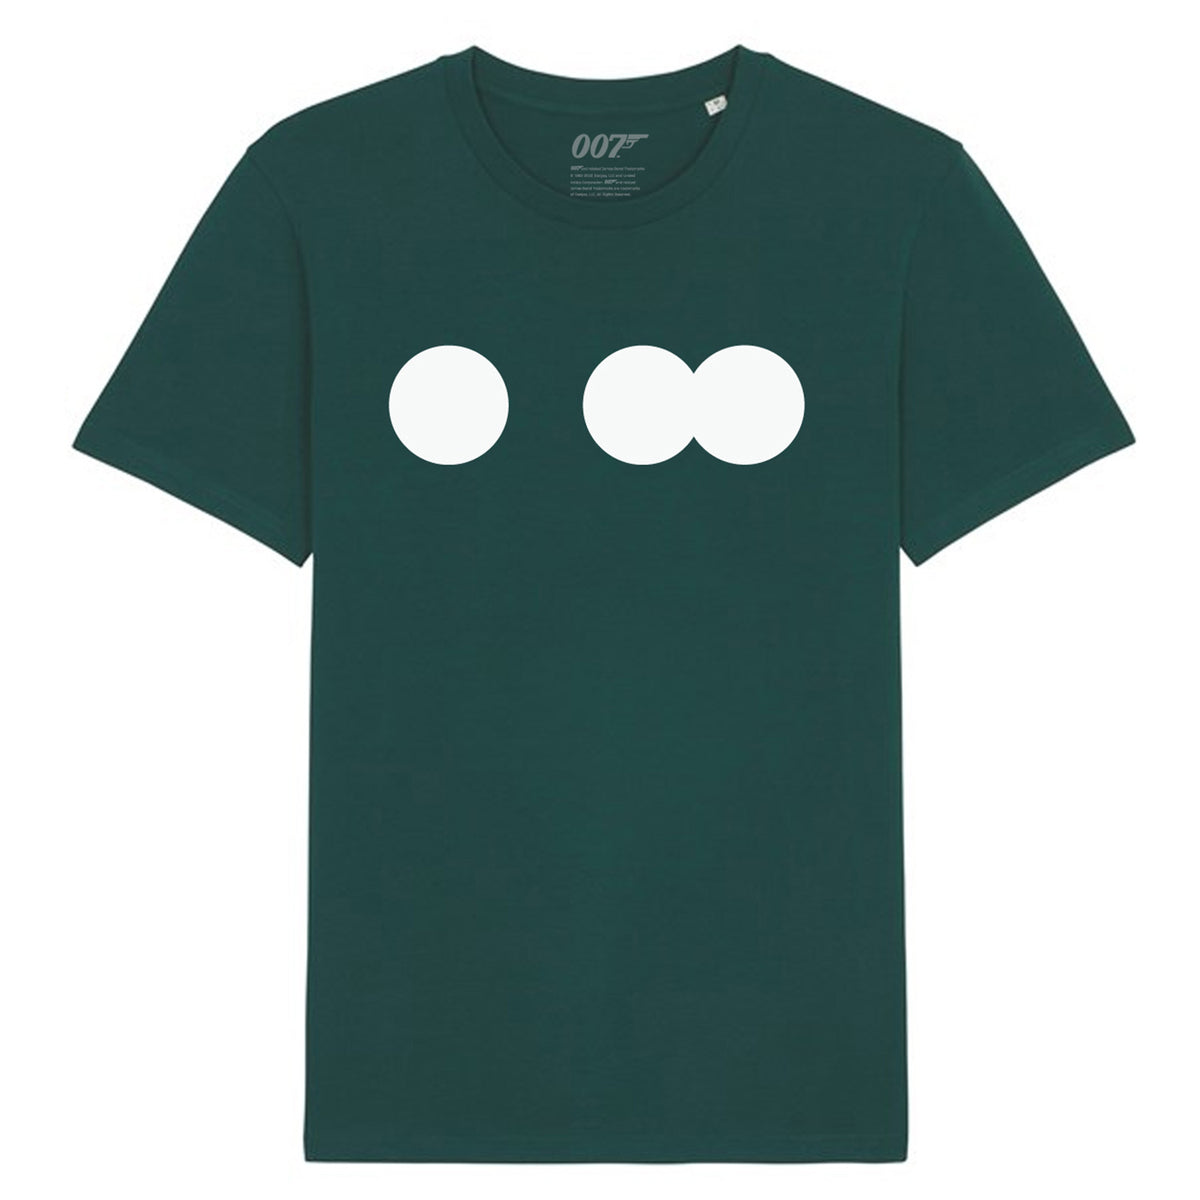 James Bond Baize Green 60th Anniversary T-shirt (Outlet Item)